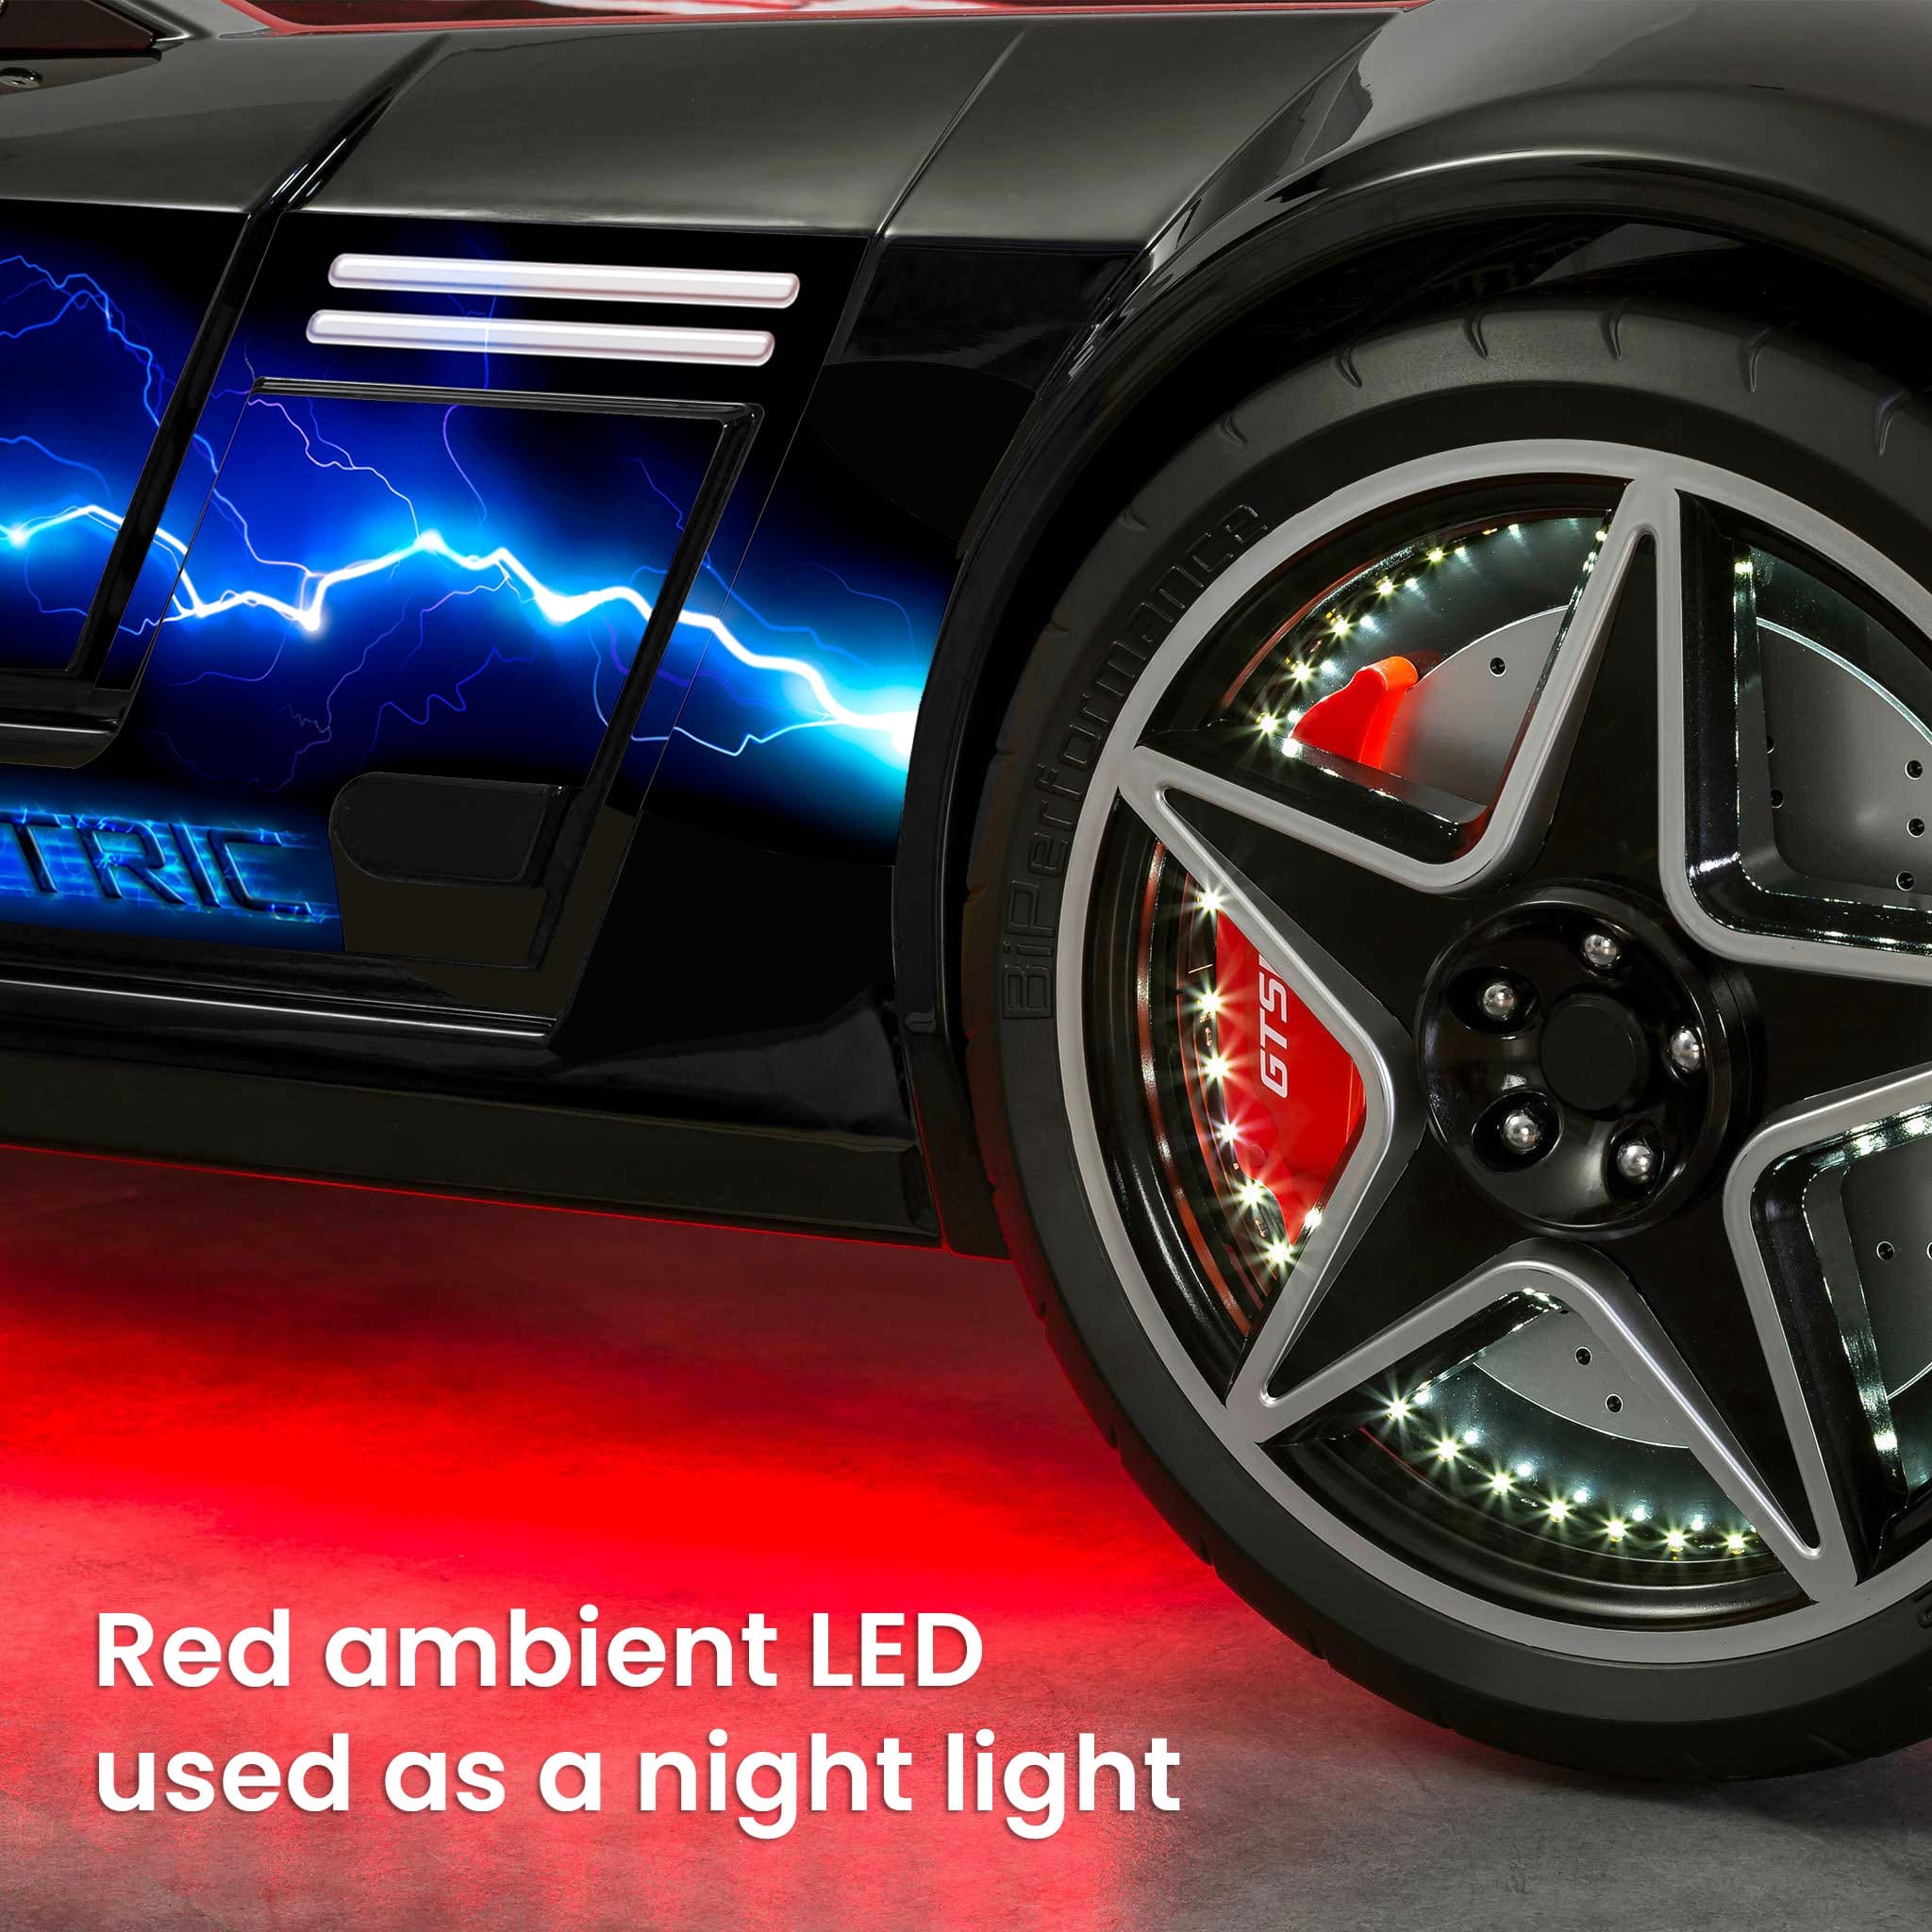 GTS EV Twin-Size Race Car Bed, Remote Control, LED Lights, EV Sound FX, Vegan Leather Interior, License Plate